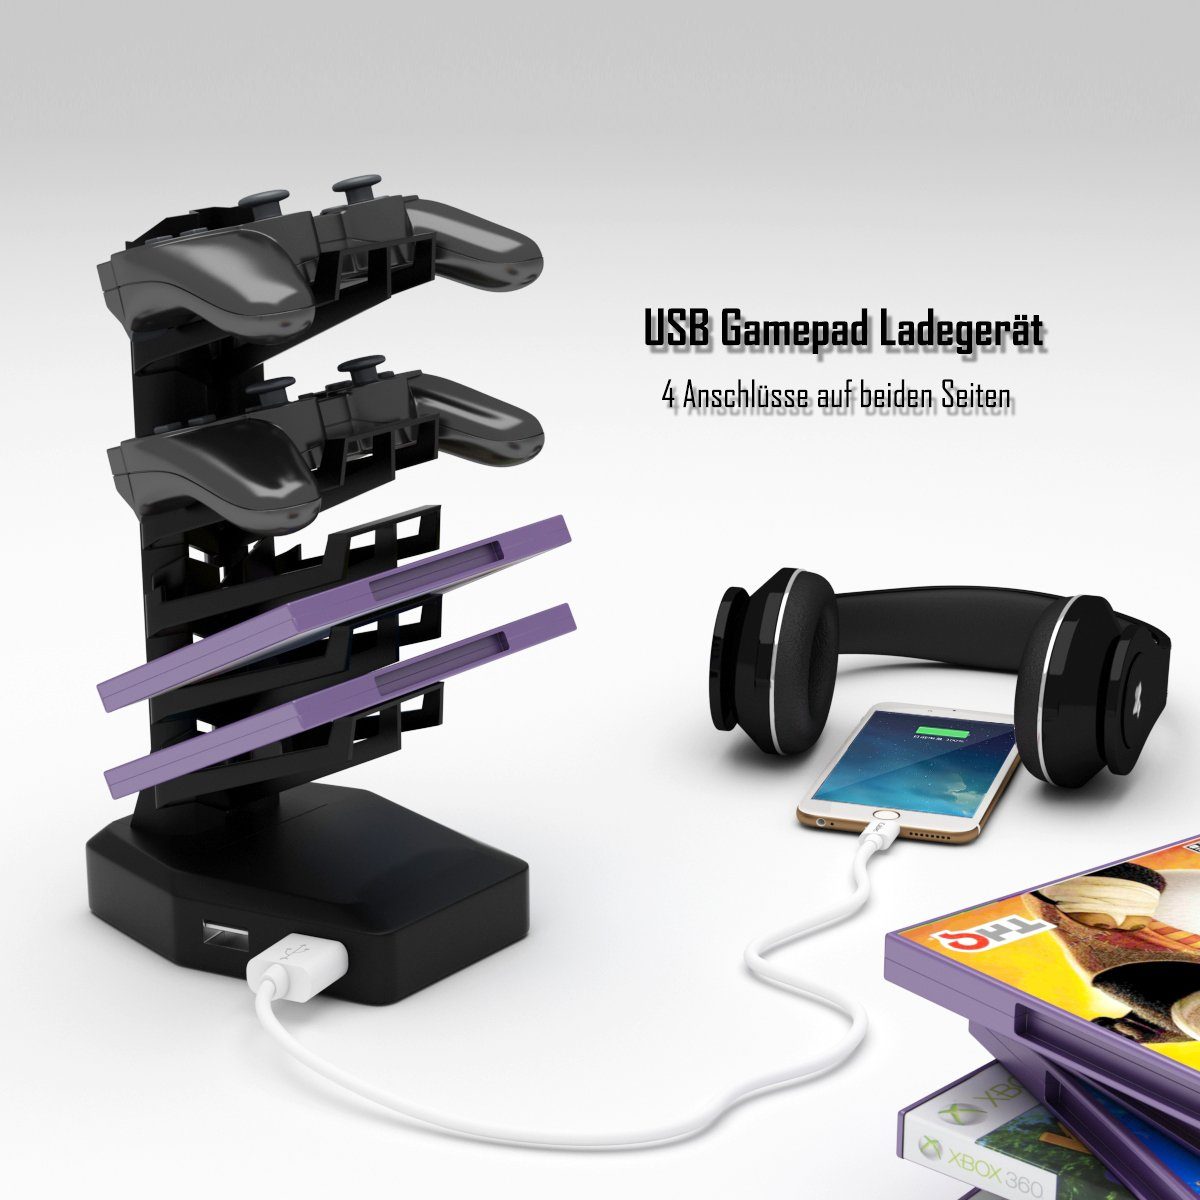 COSTWAY Gamingtisch, RGB-Led, USB, 120cm 4 Z-förmig Controller-Halterung mit